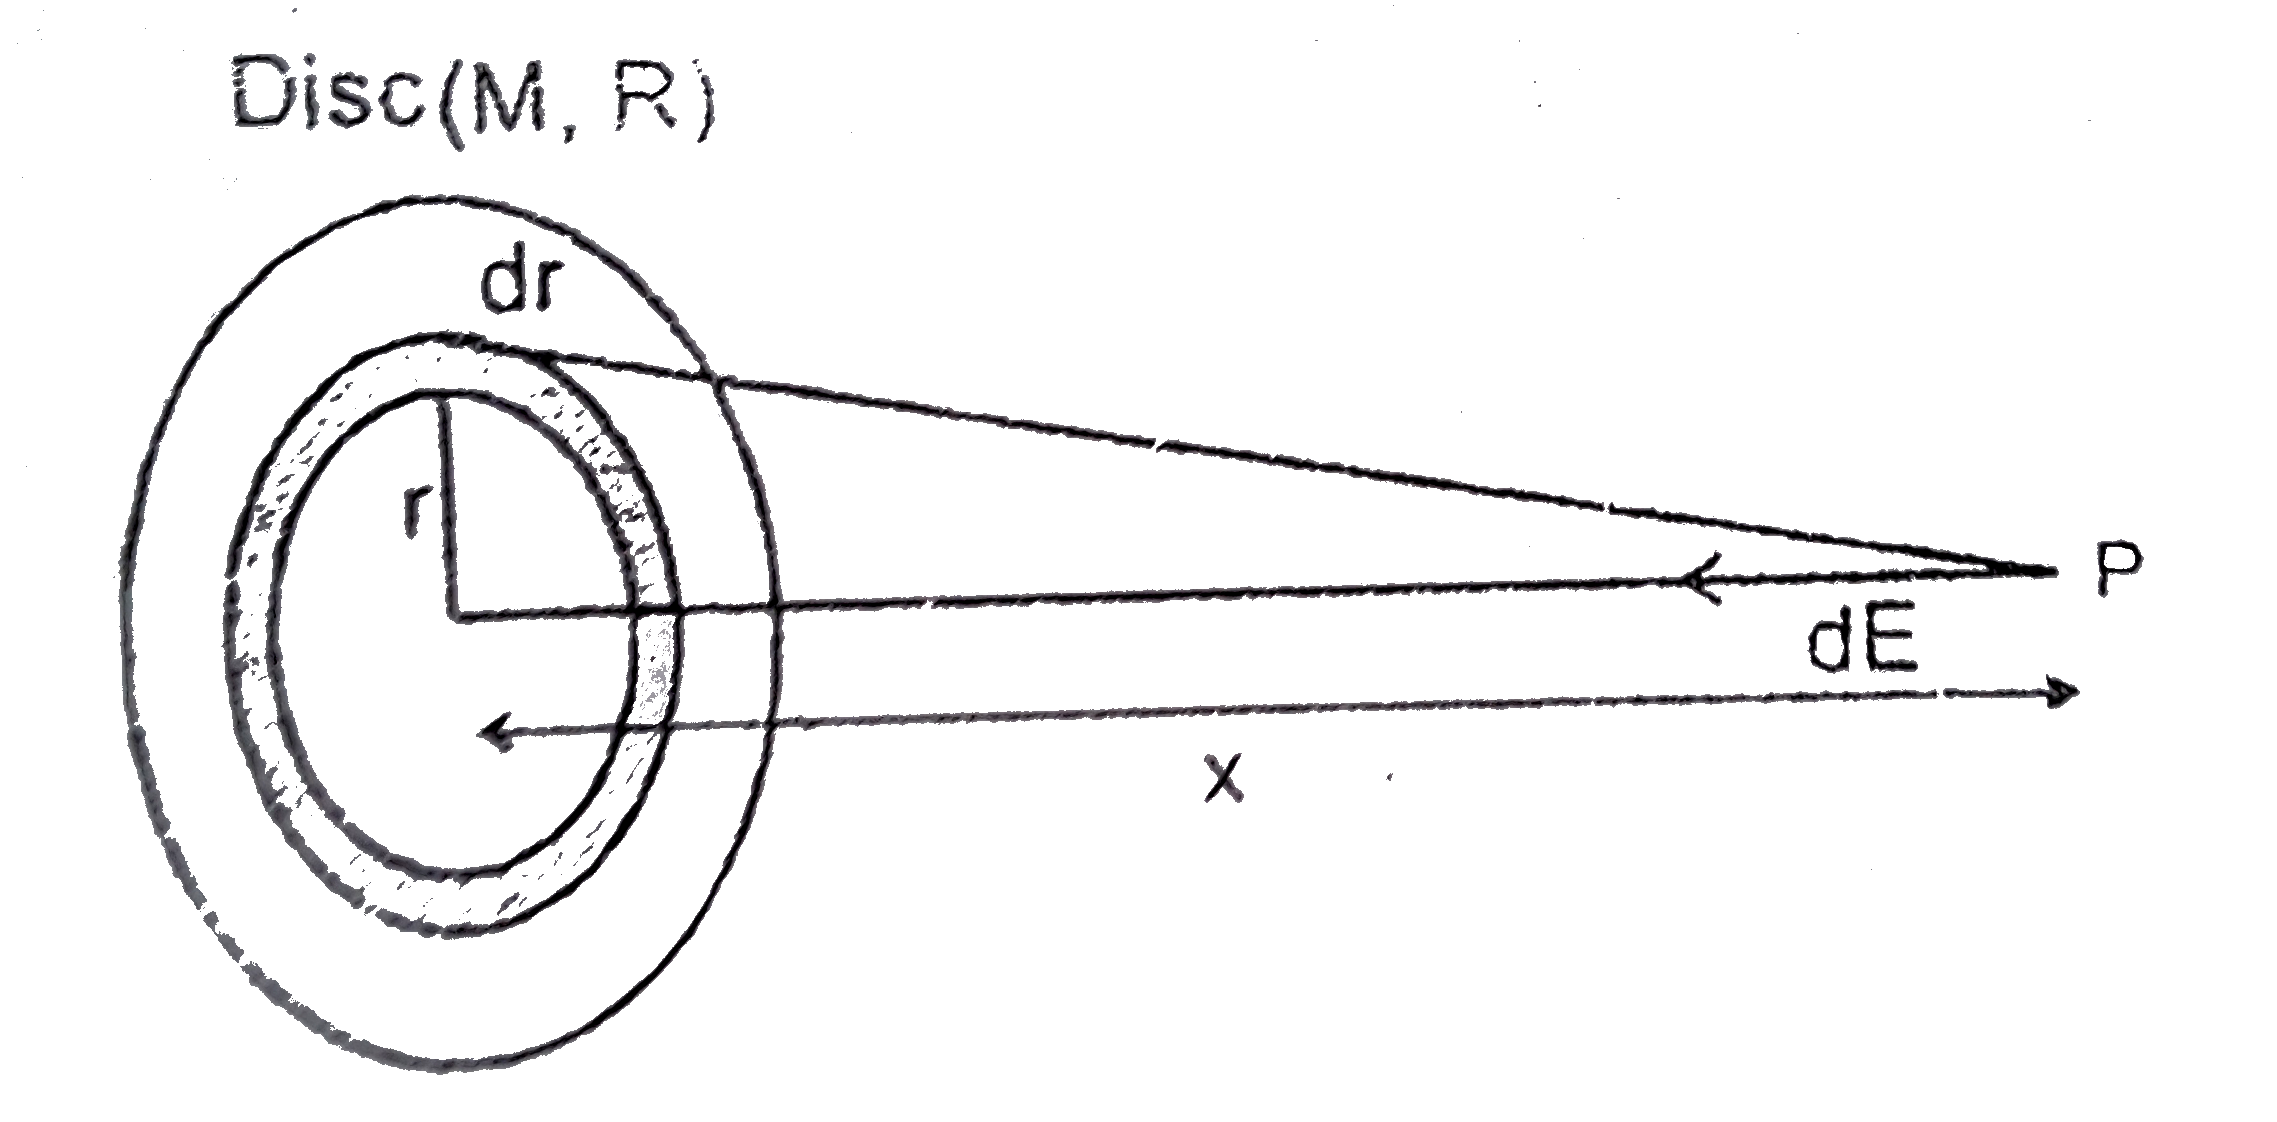 concider a semicircular ring of radius R . its linear mass density b varies  as λ=λ_p